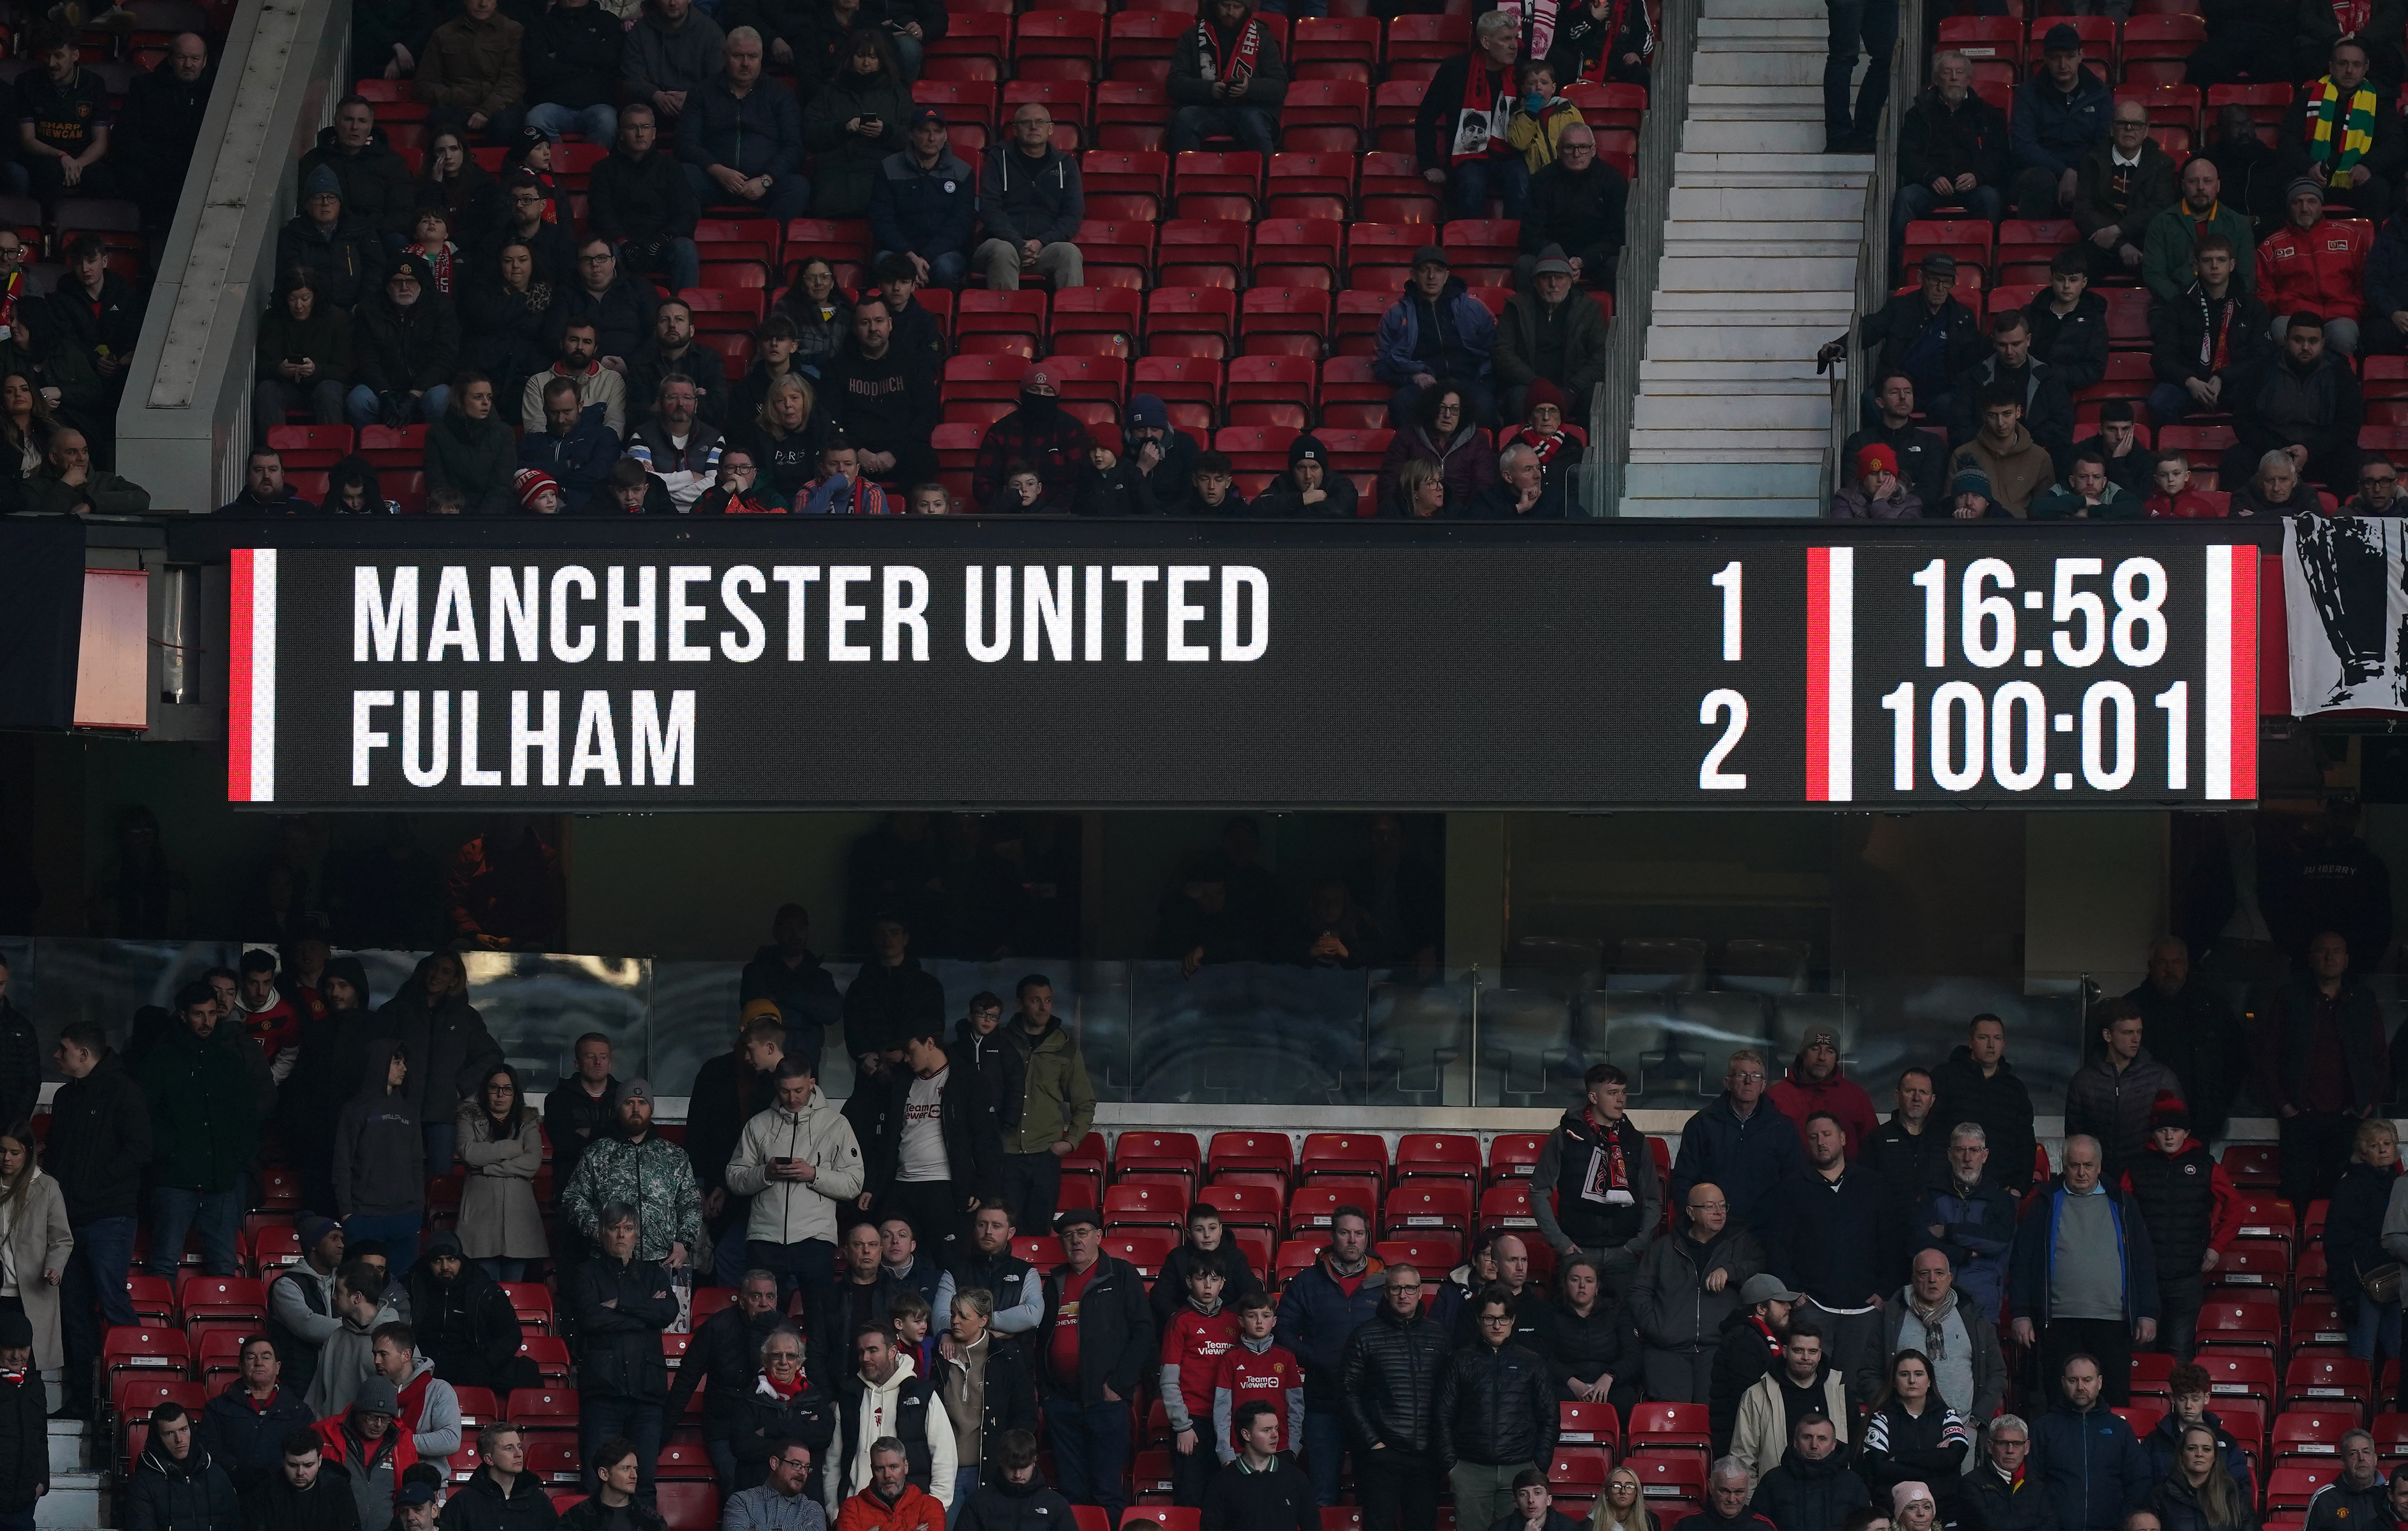 Manchester United v Fulham scoreboard